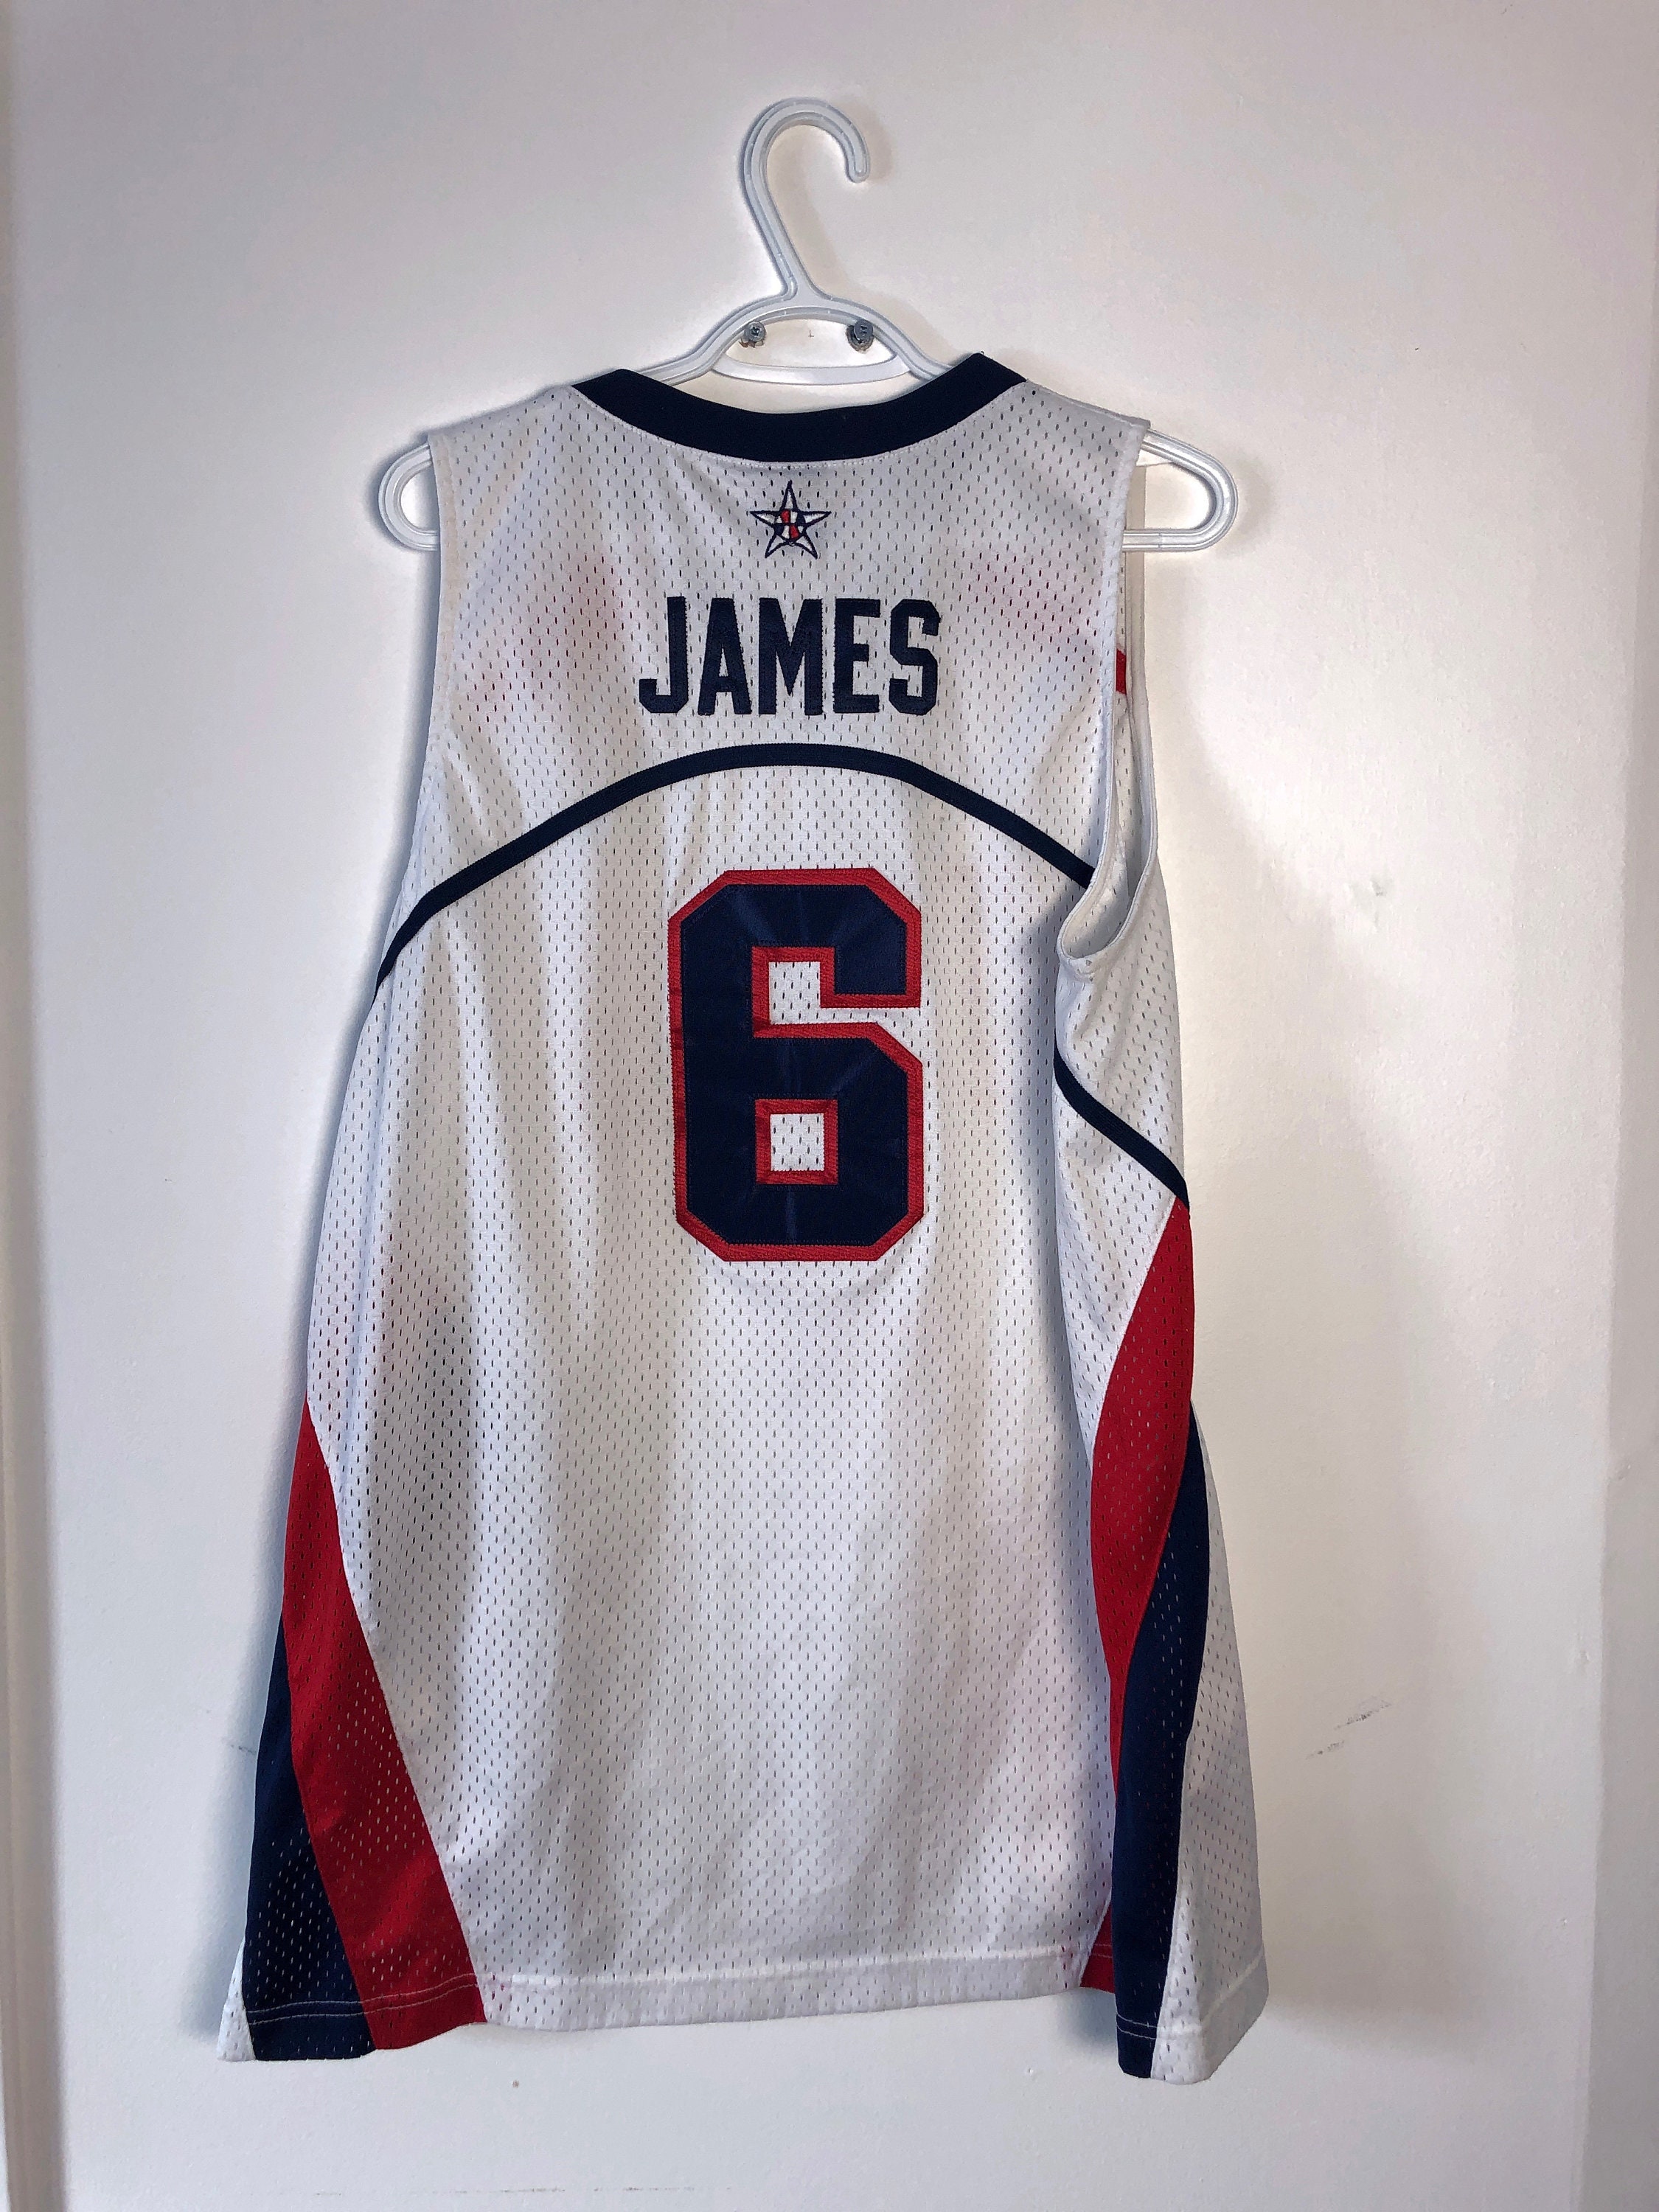 Vintage Lebron James Nike Team USA Basketball Jersey L 